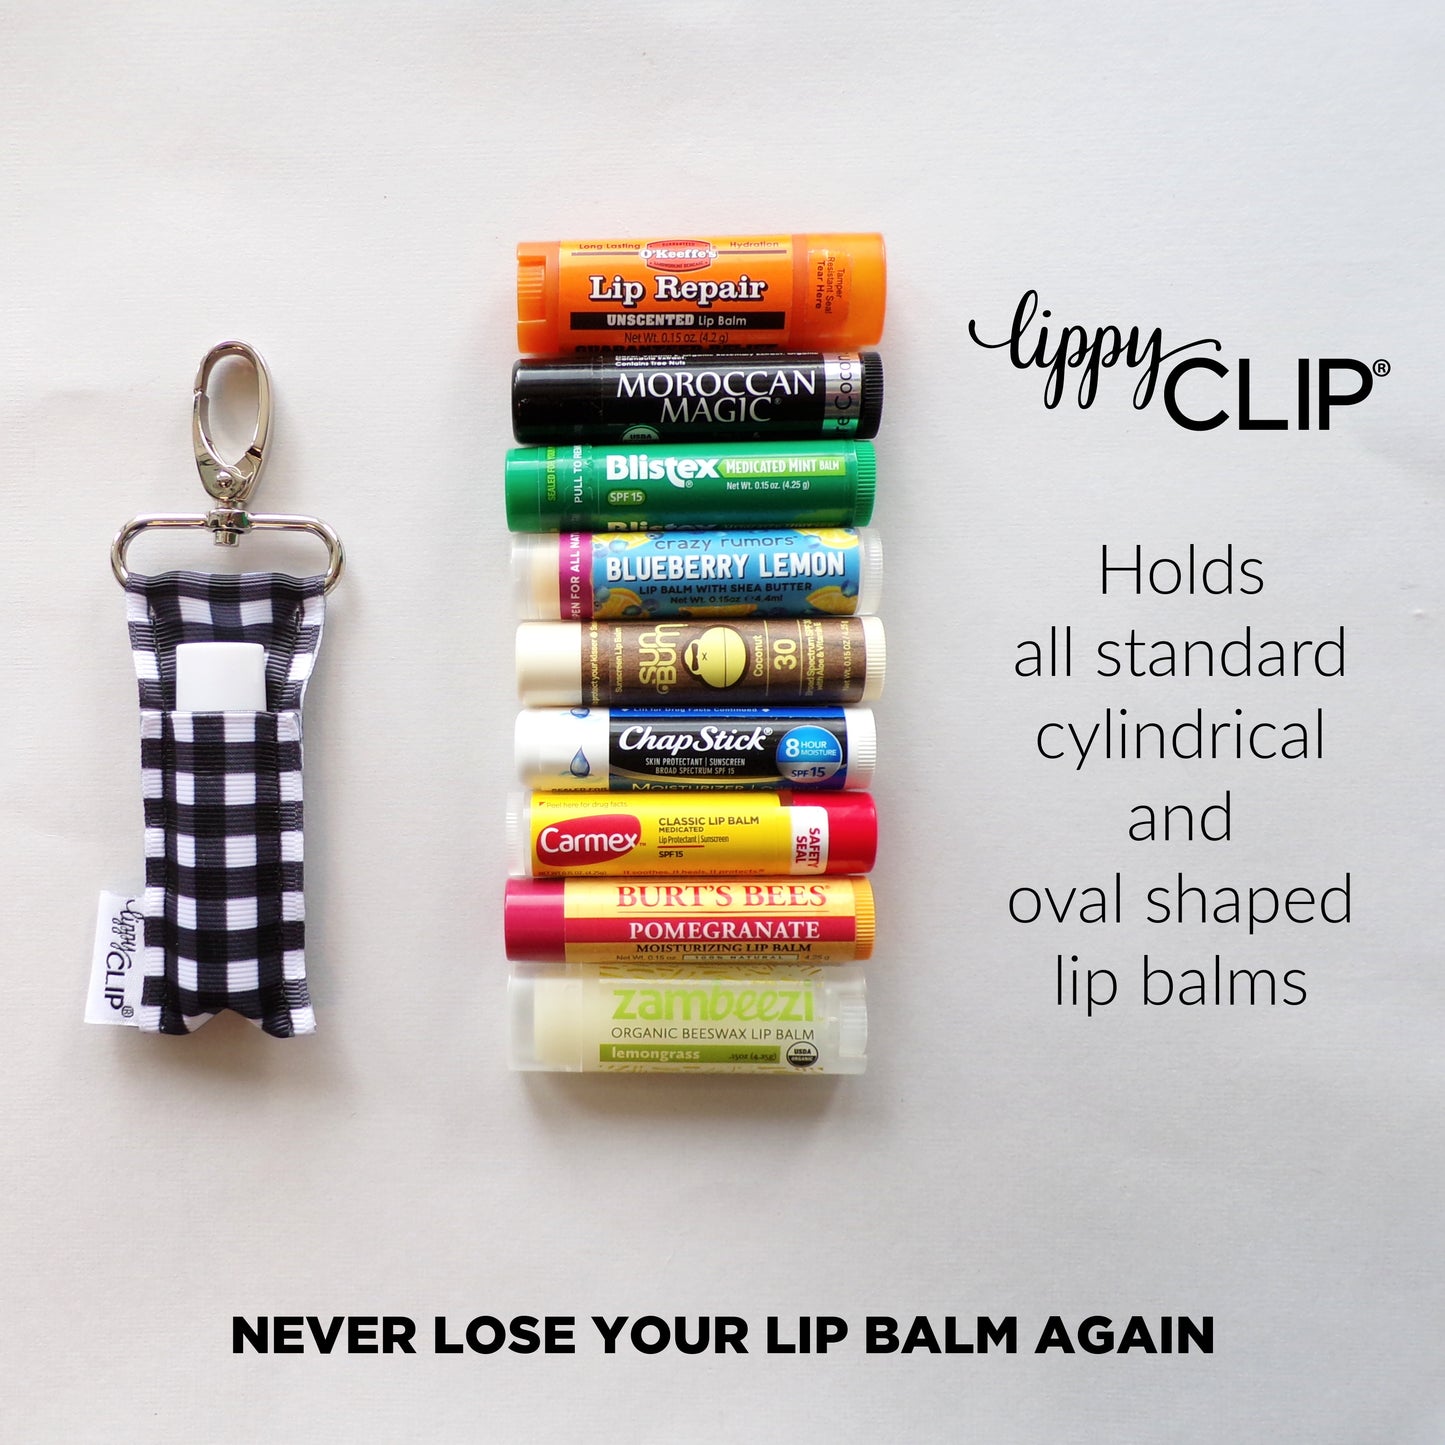 All American Girl LippyClip® Lip Balm Holder